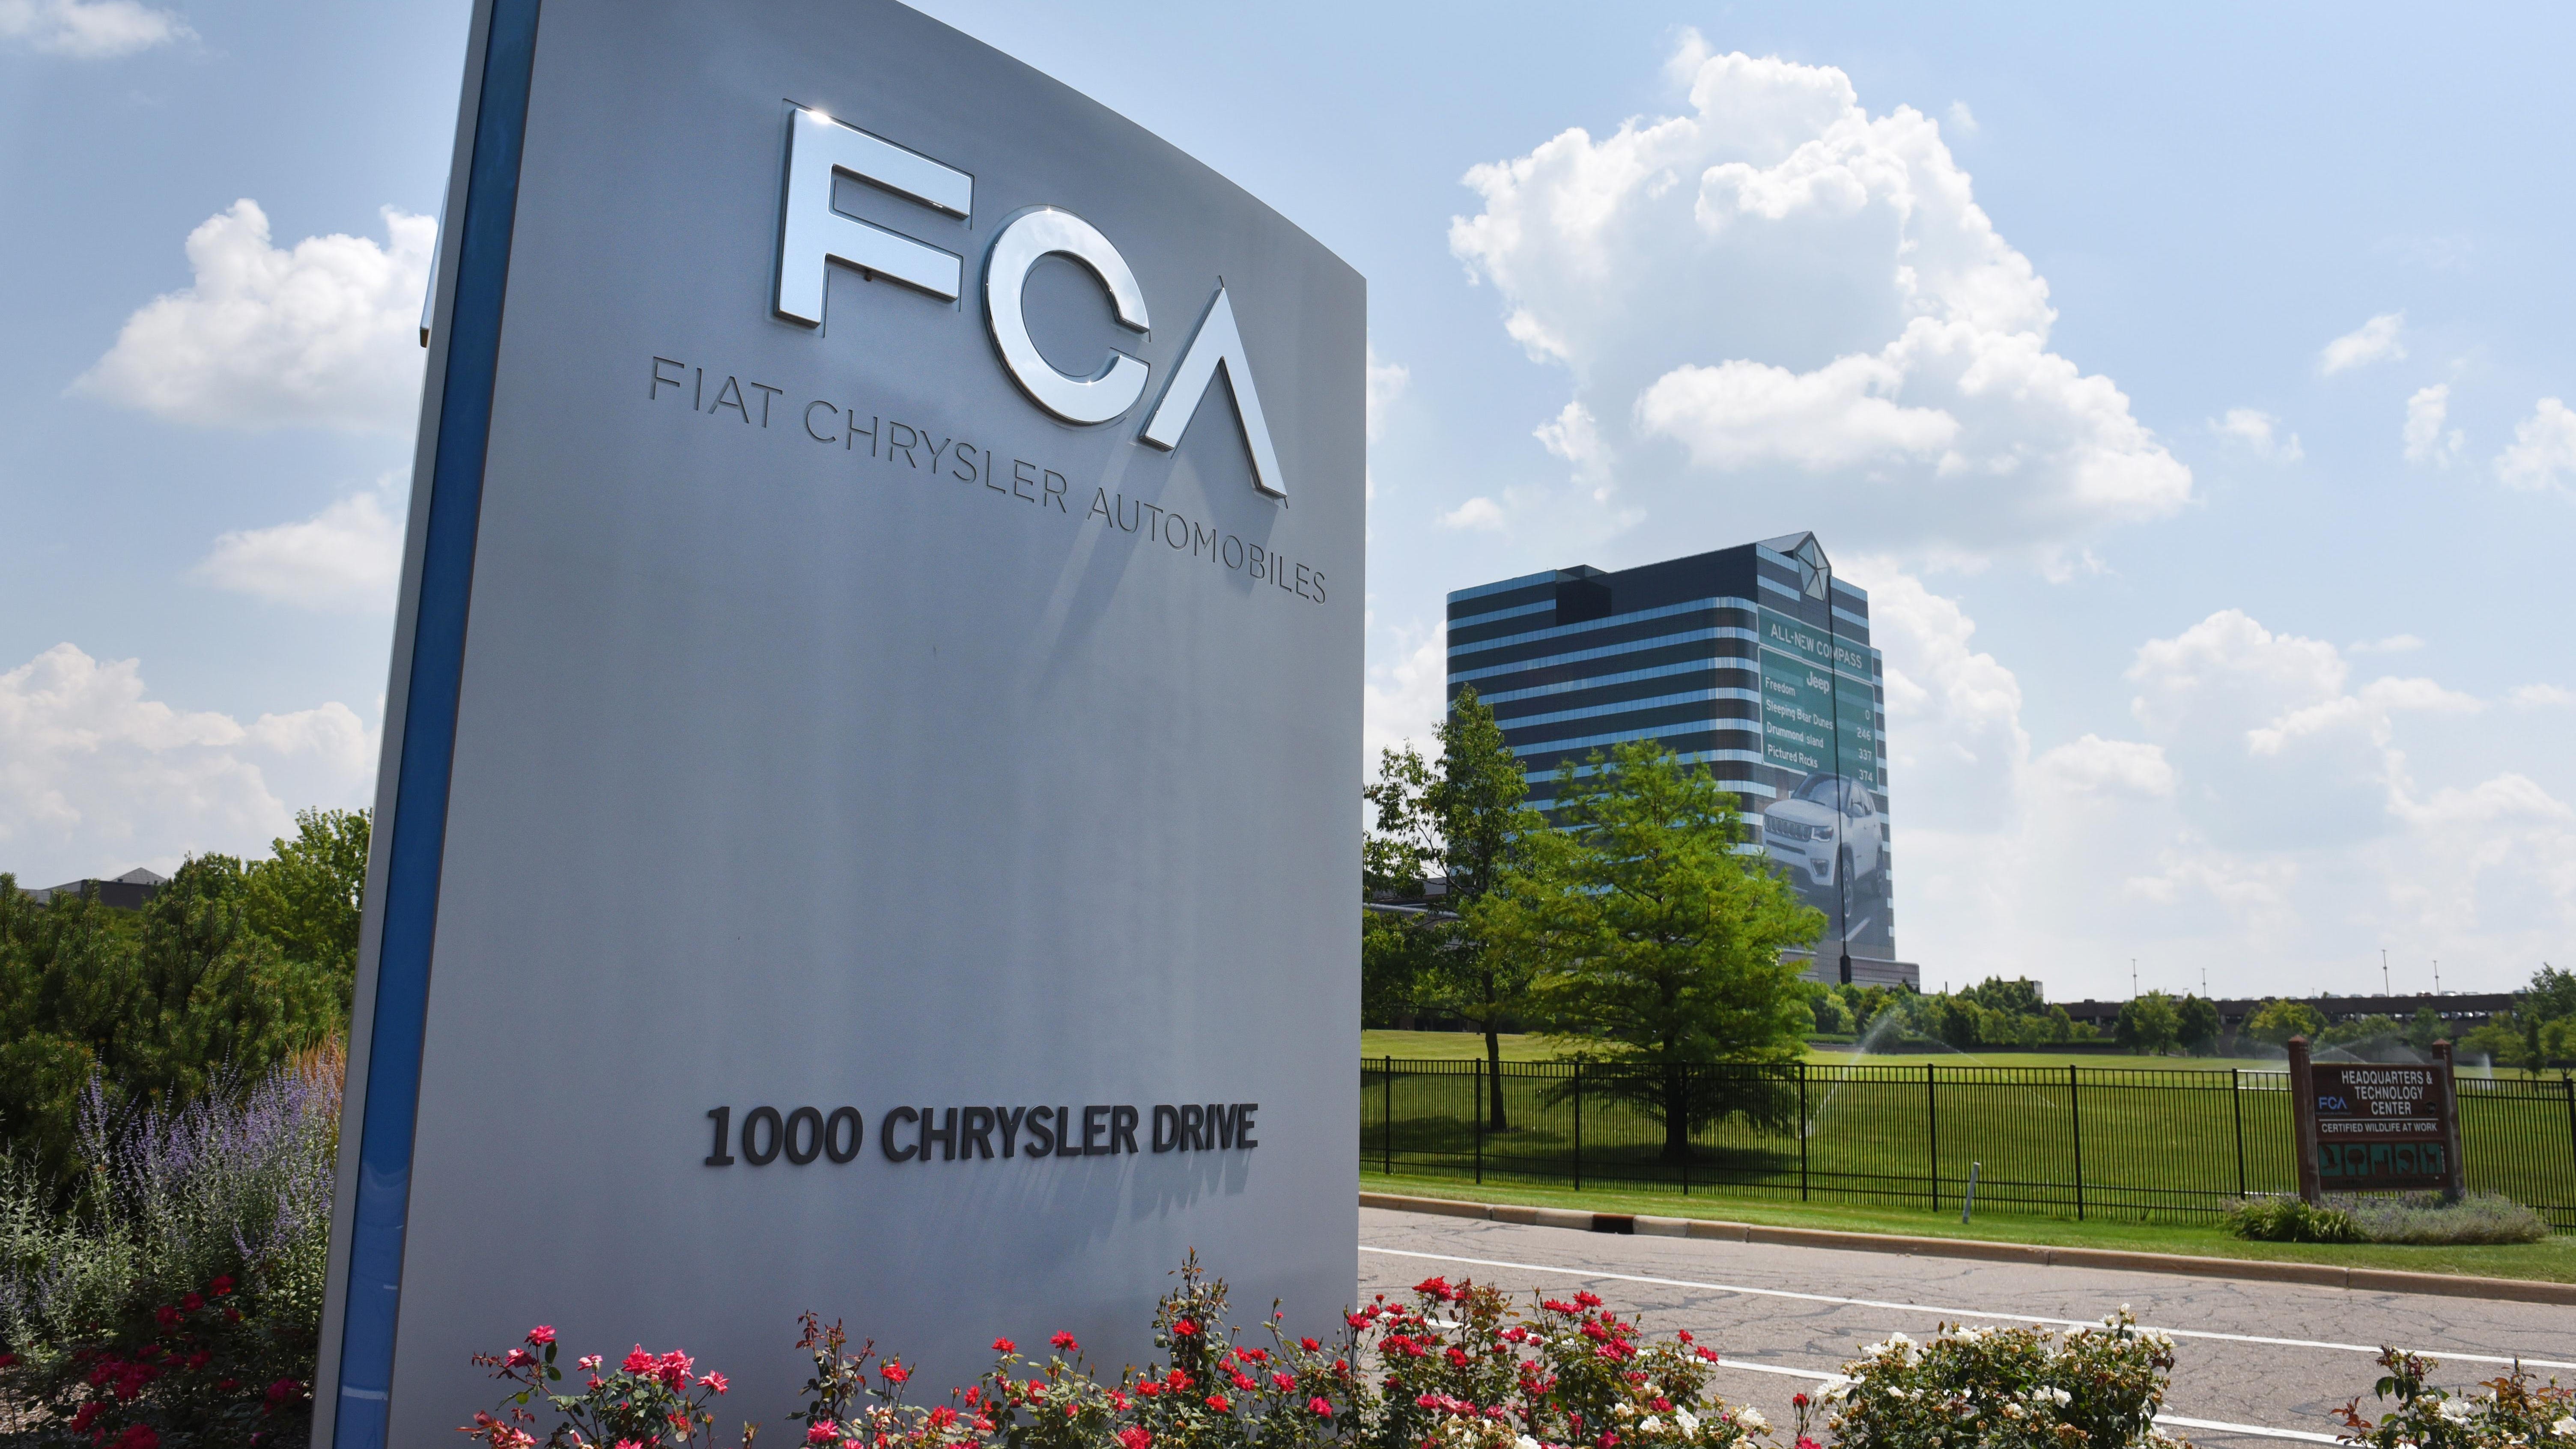 Fiat Chrysler Automobiles world headquarters